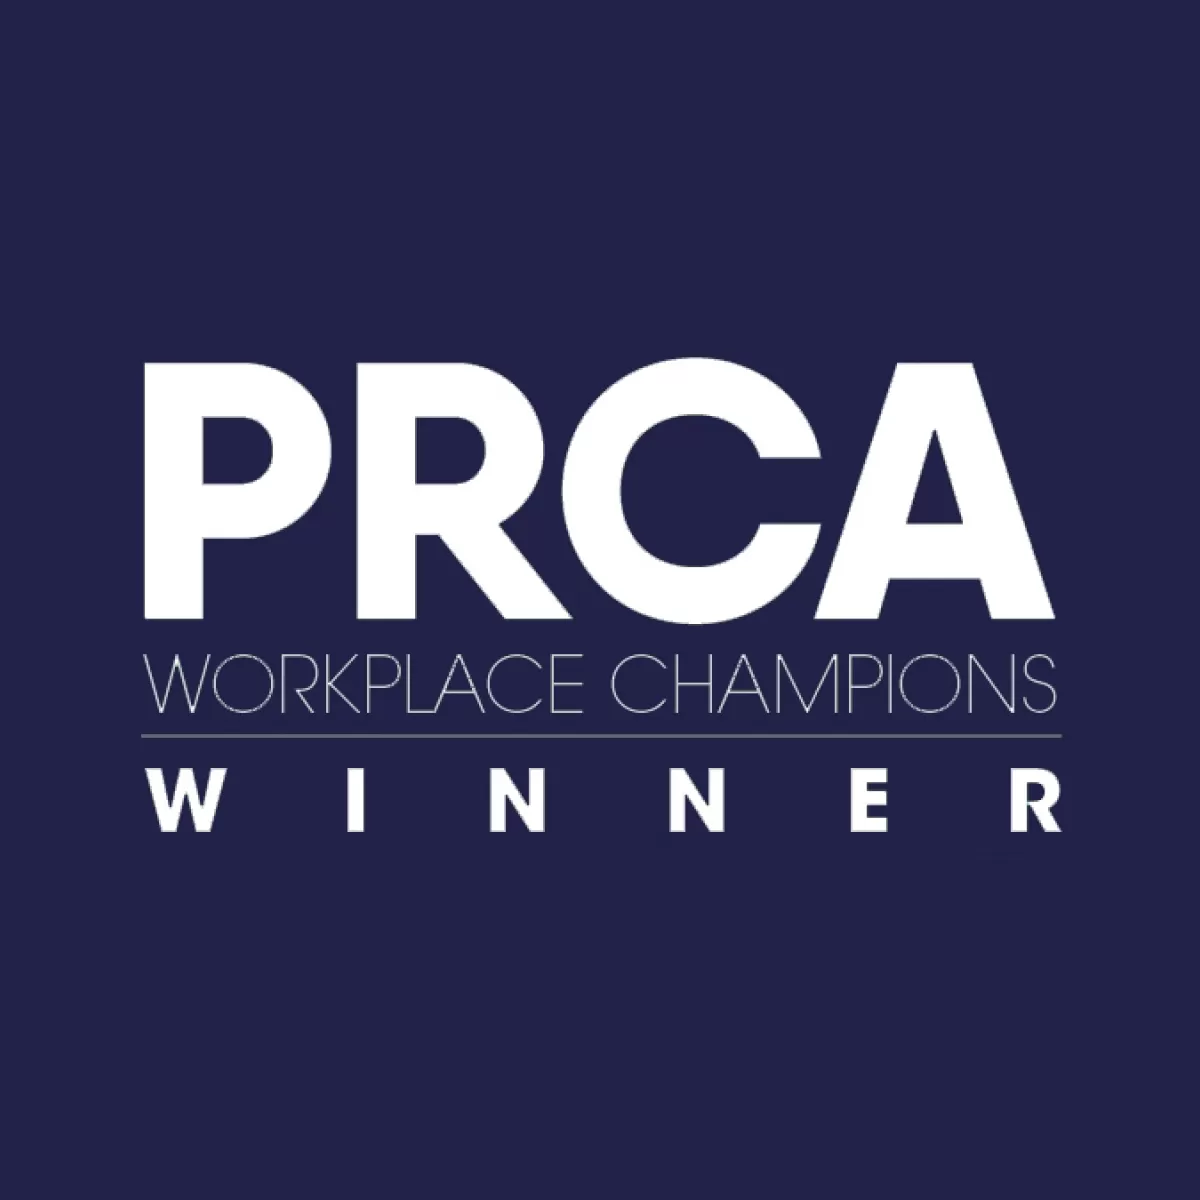 News PRCA Workplace champions WINNER 2021 1200px